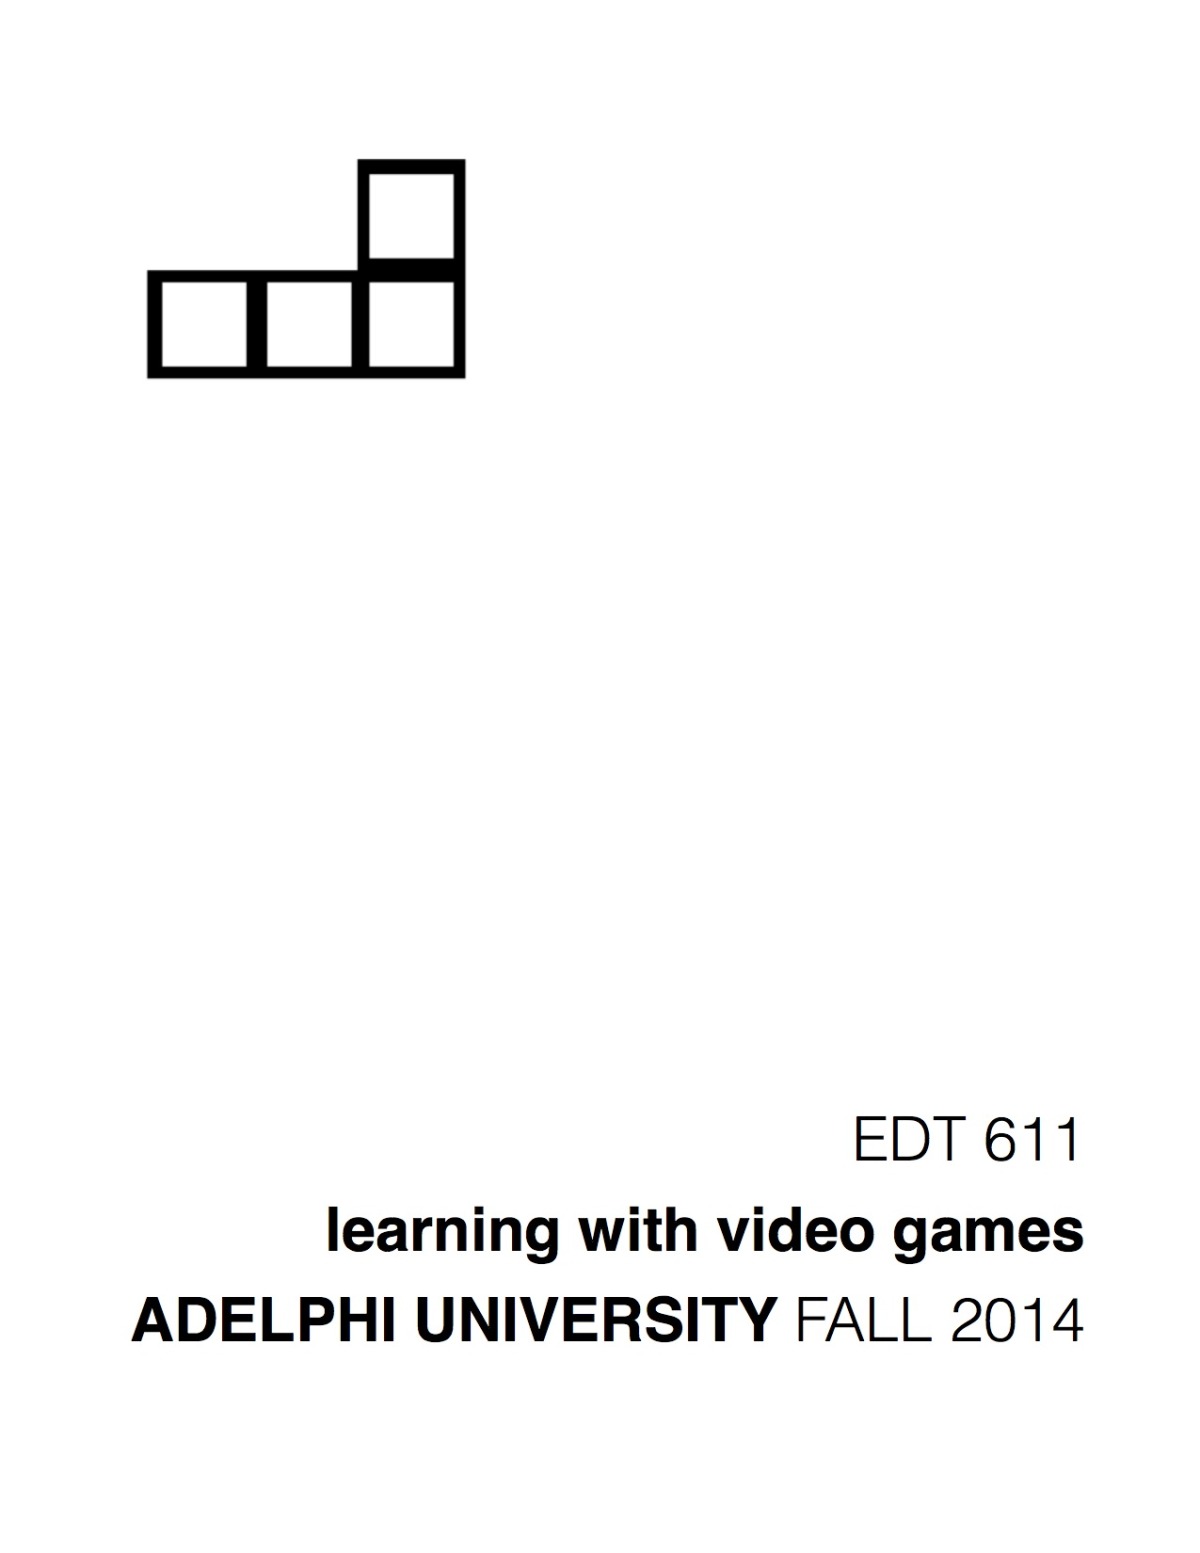 flyer 11 - tetris.jpg